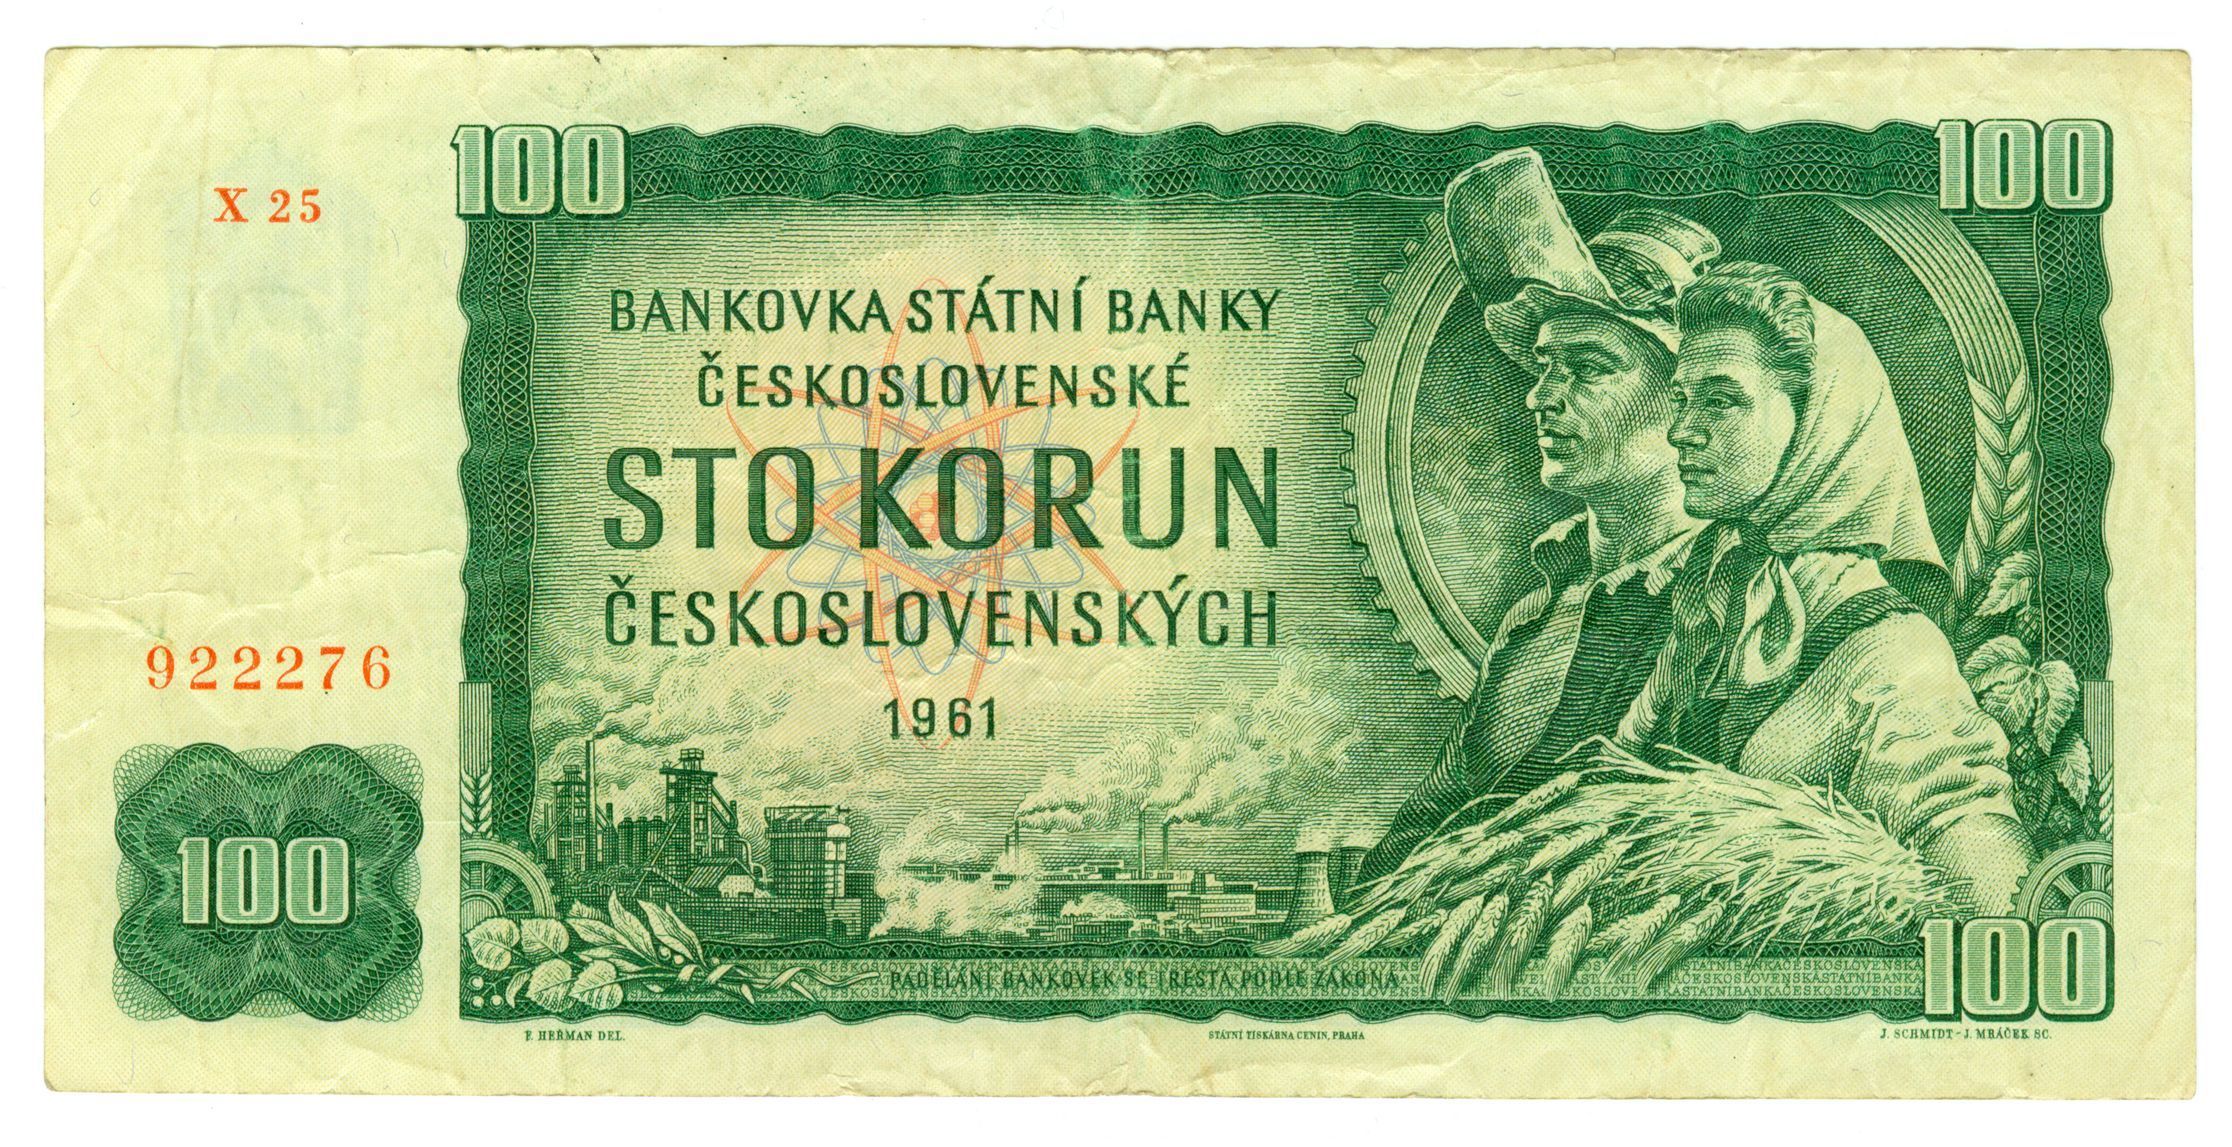 Stokoruna 100 korun československých bankovka 1961